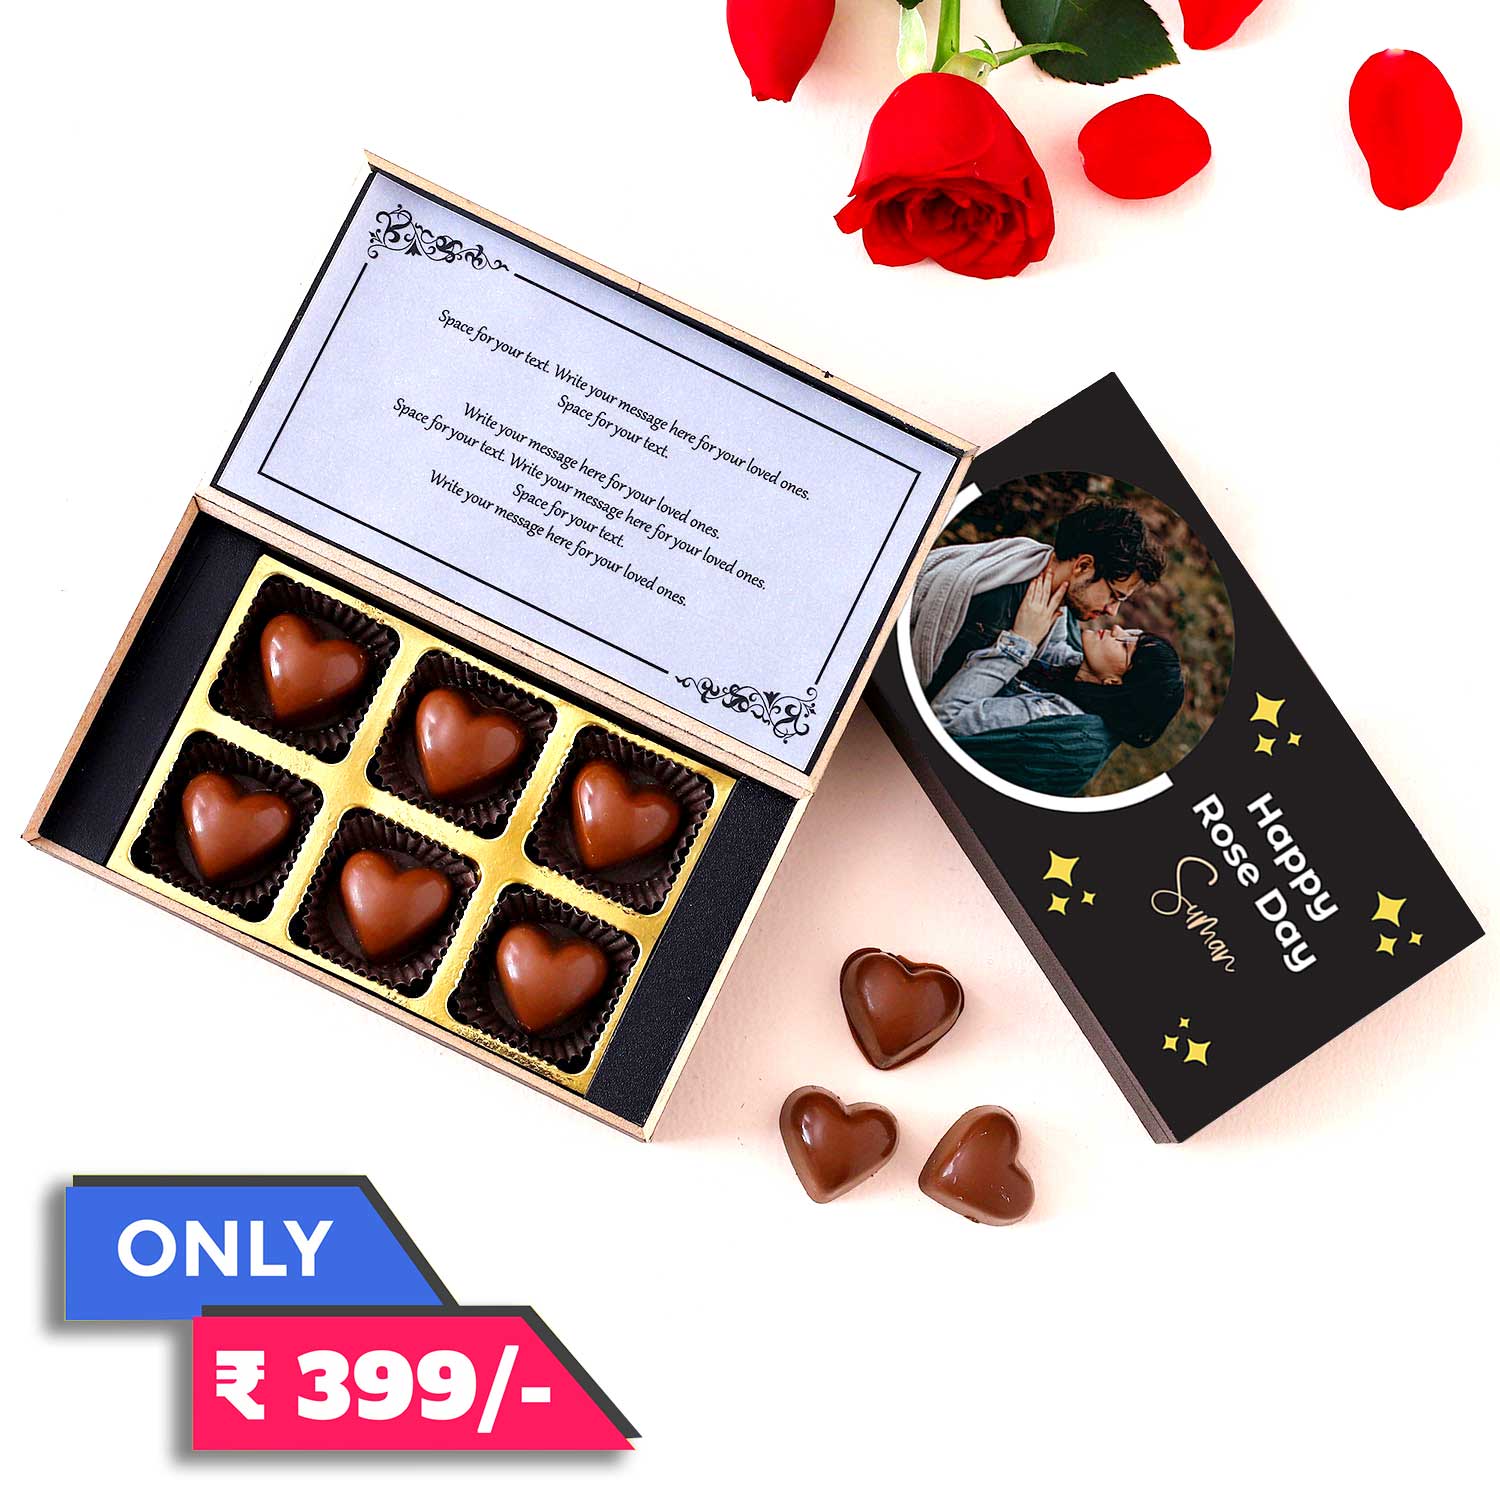 Rose Day Customised Chocolate Gift Buy online I Buy at Choco ManualART